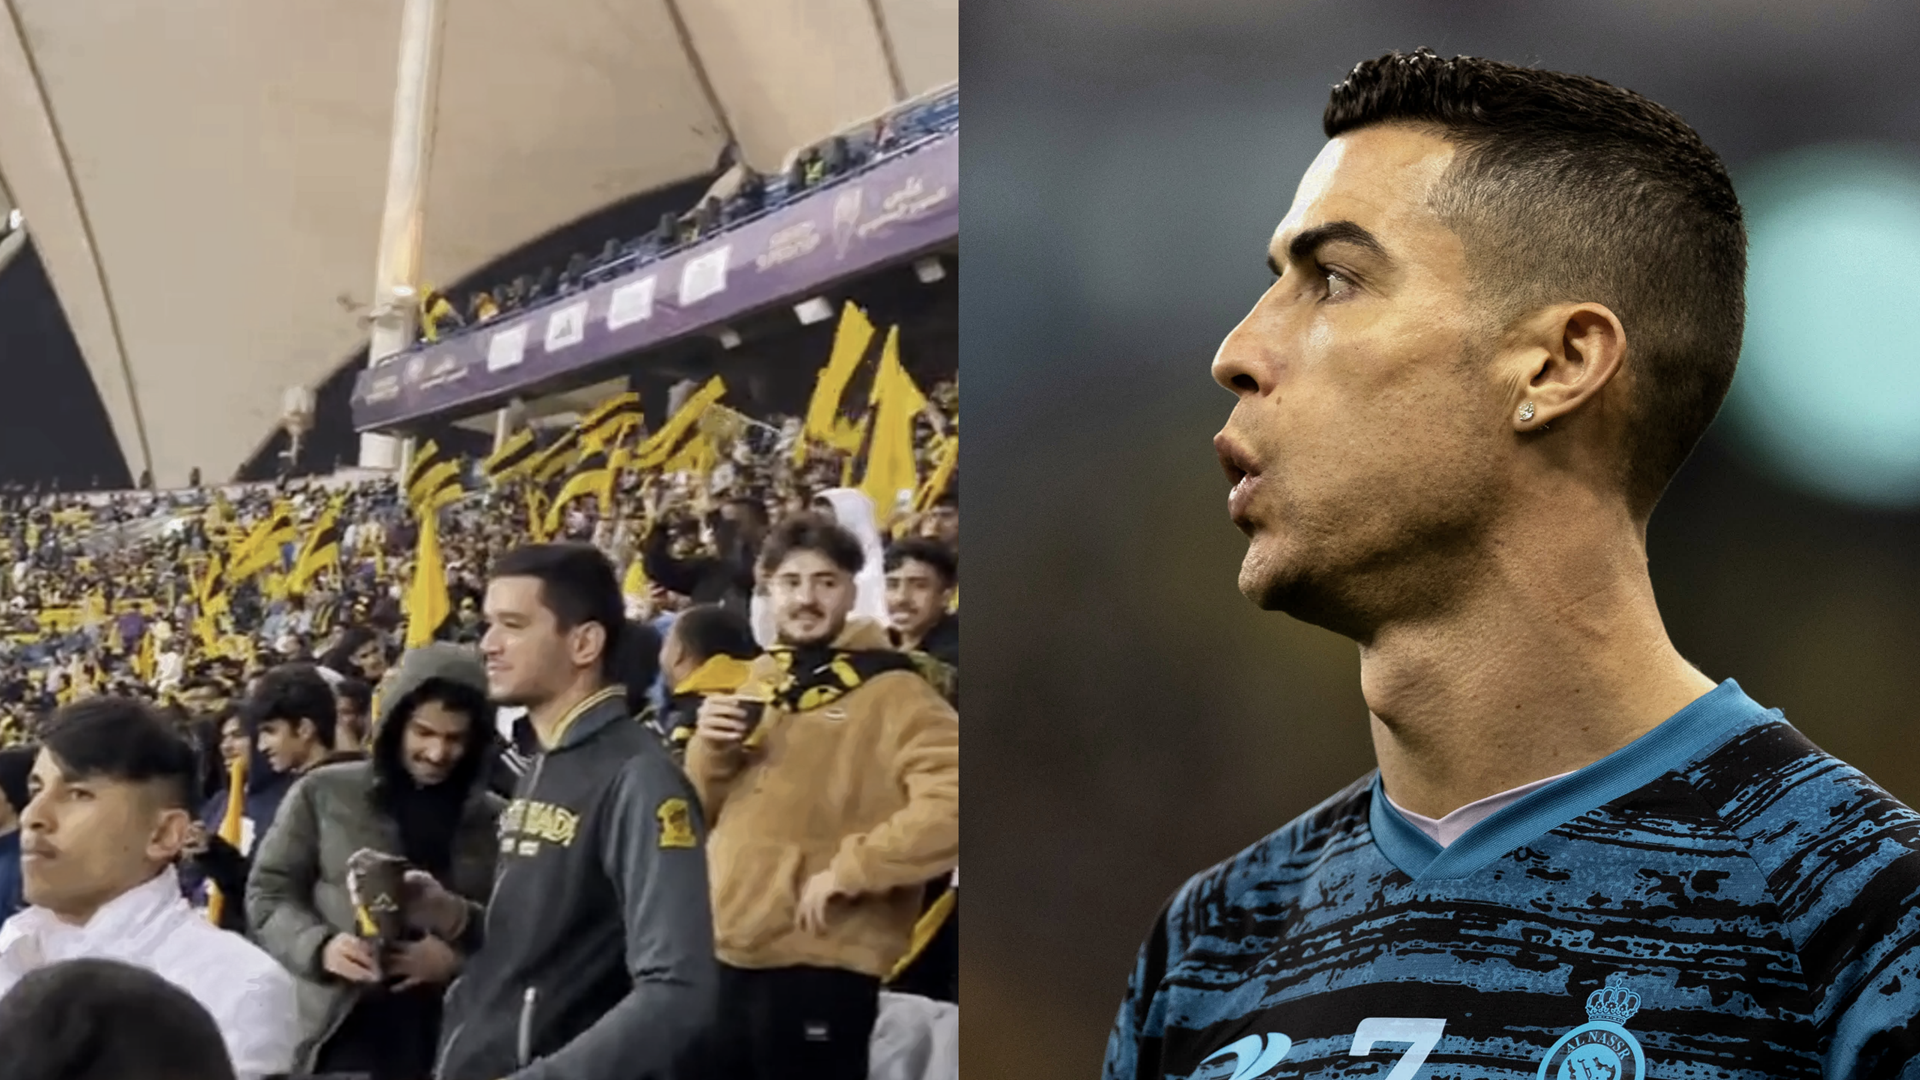 WATCH: Al-Ittihad fans taunt Cristiano Ronaldo with Lionel Messi chants